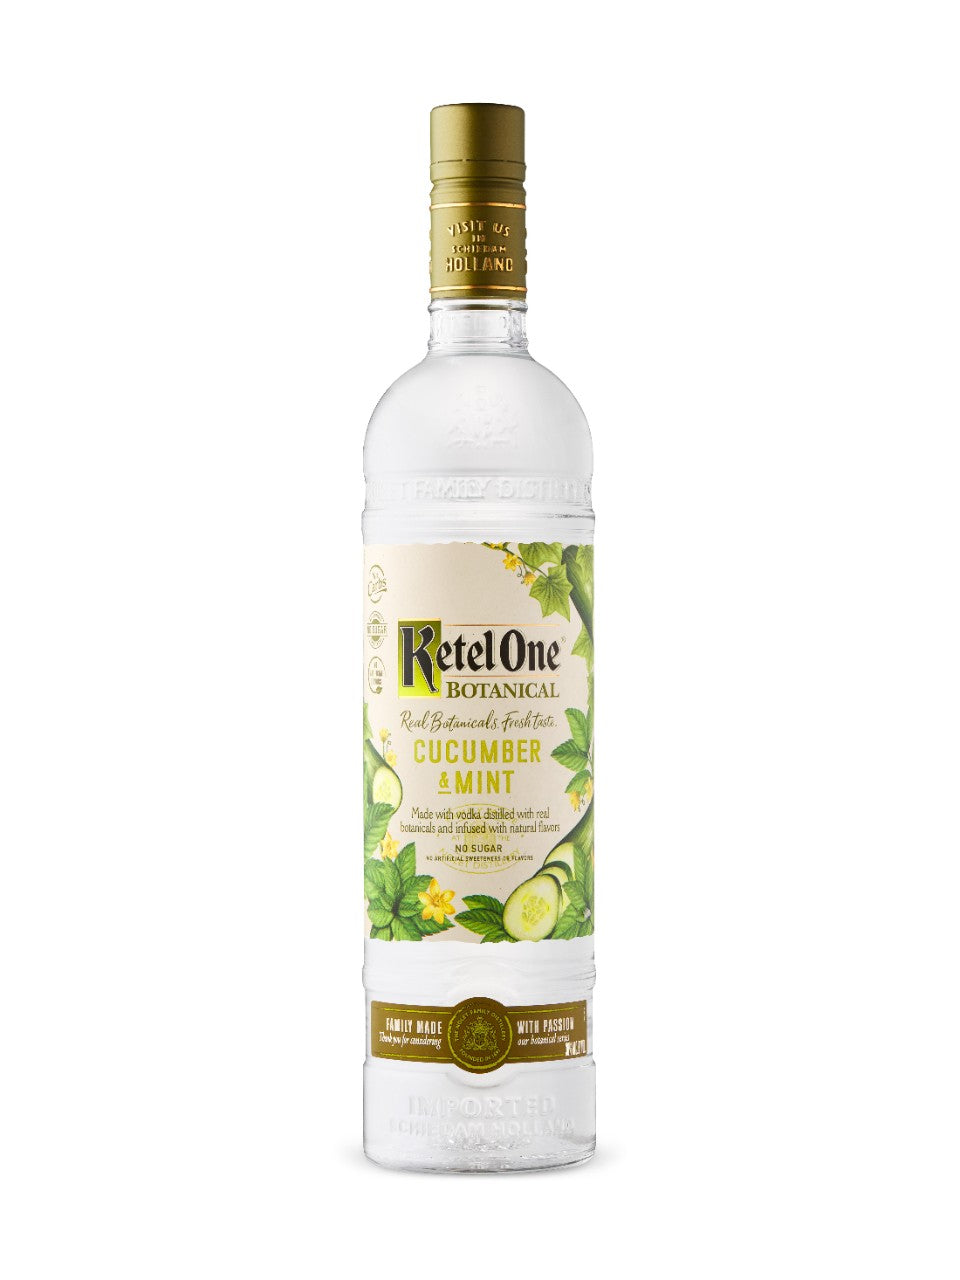 Ketel One Botanical Cucumber and Mint 750 mL bottle